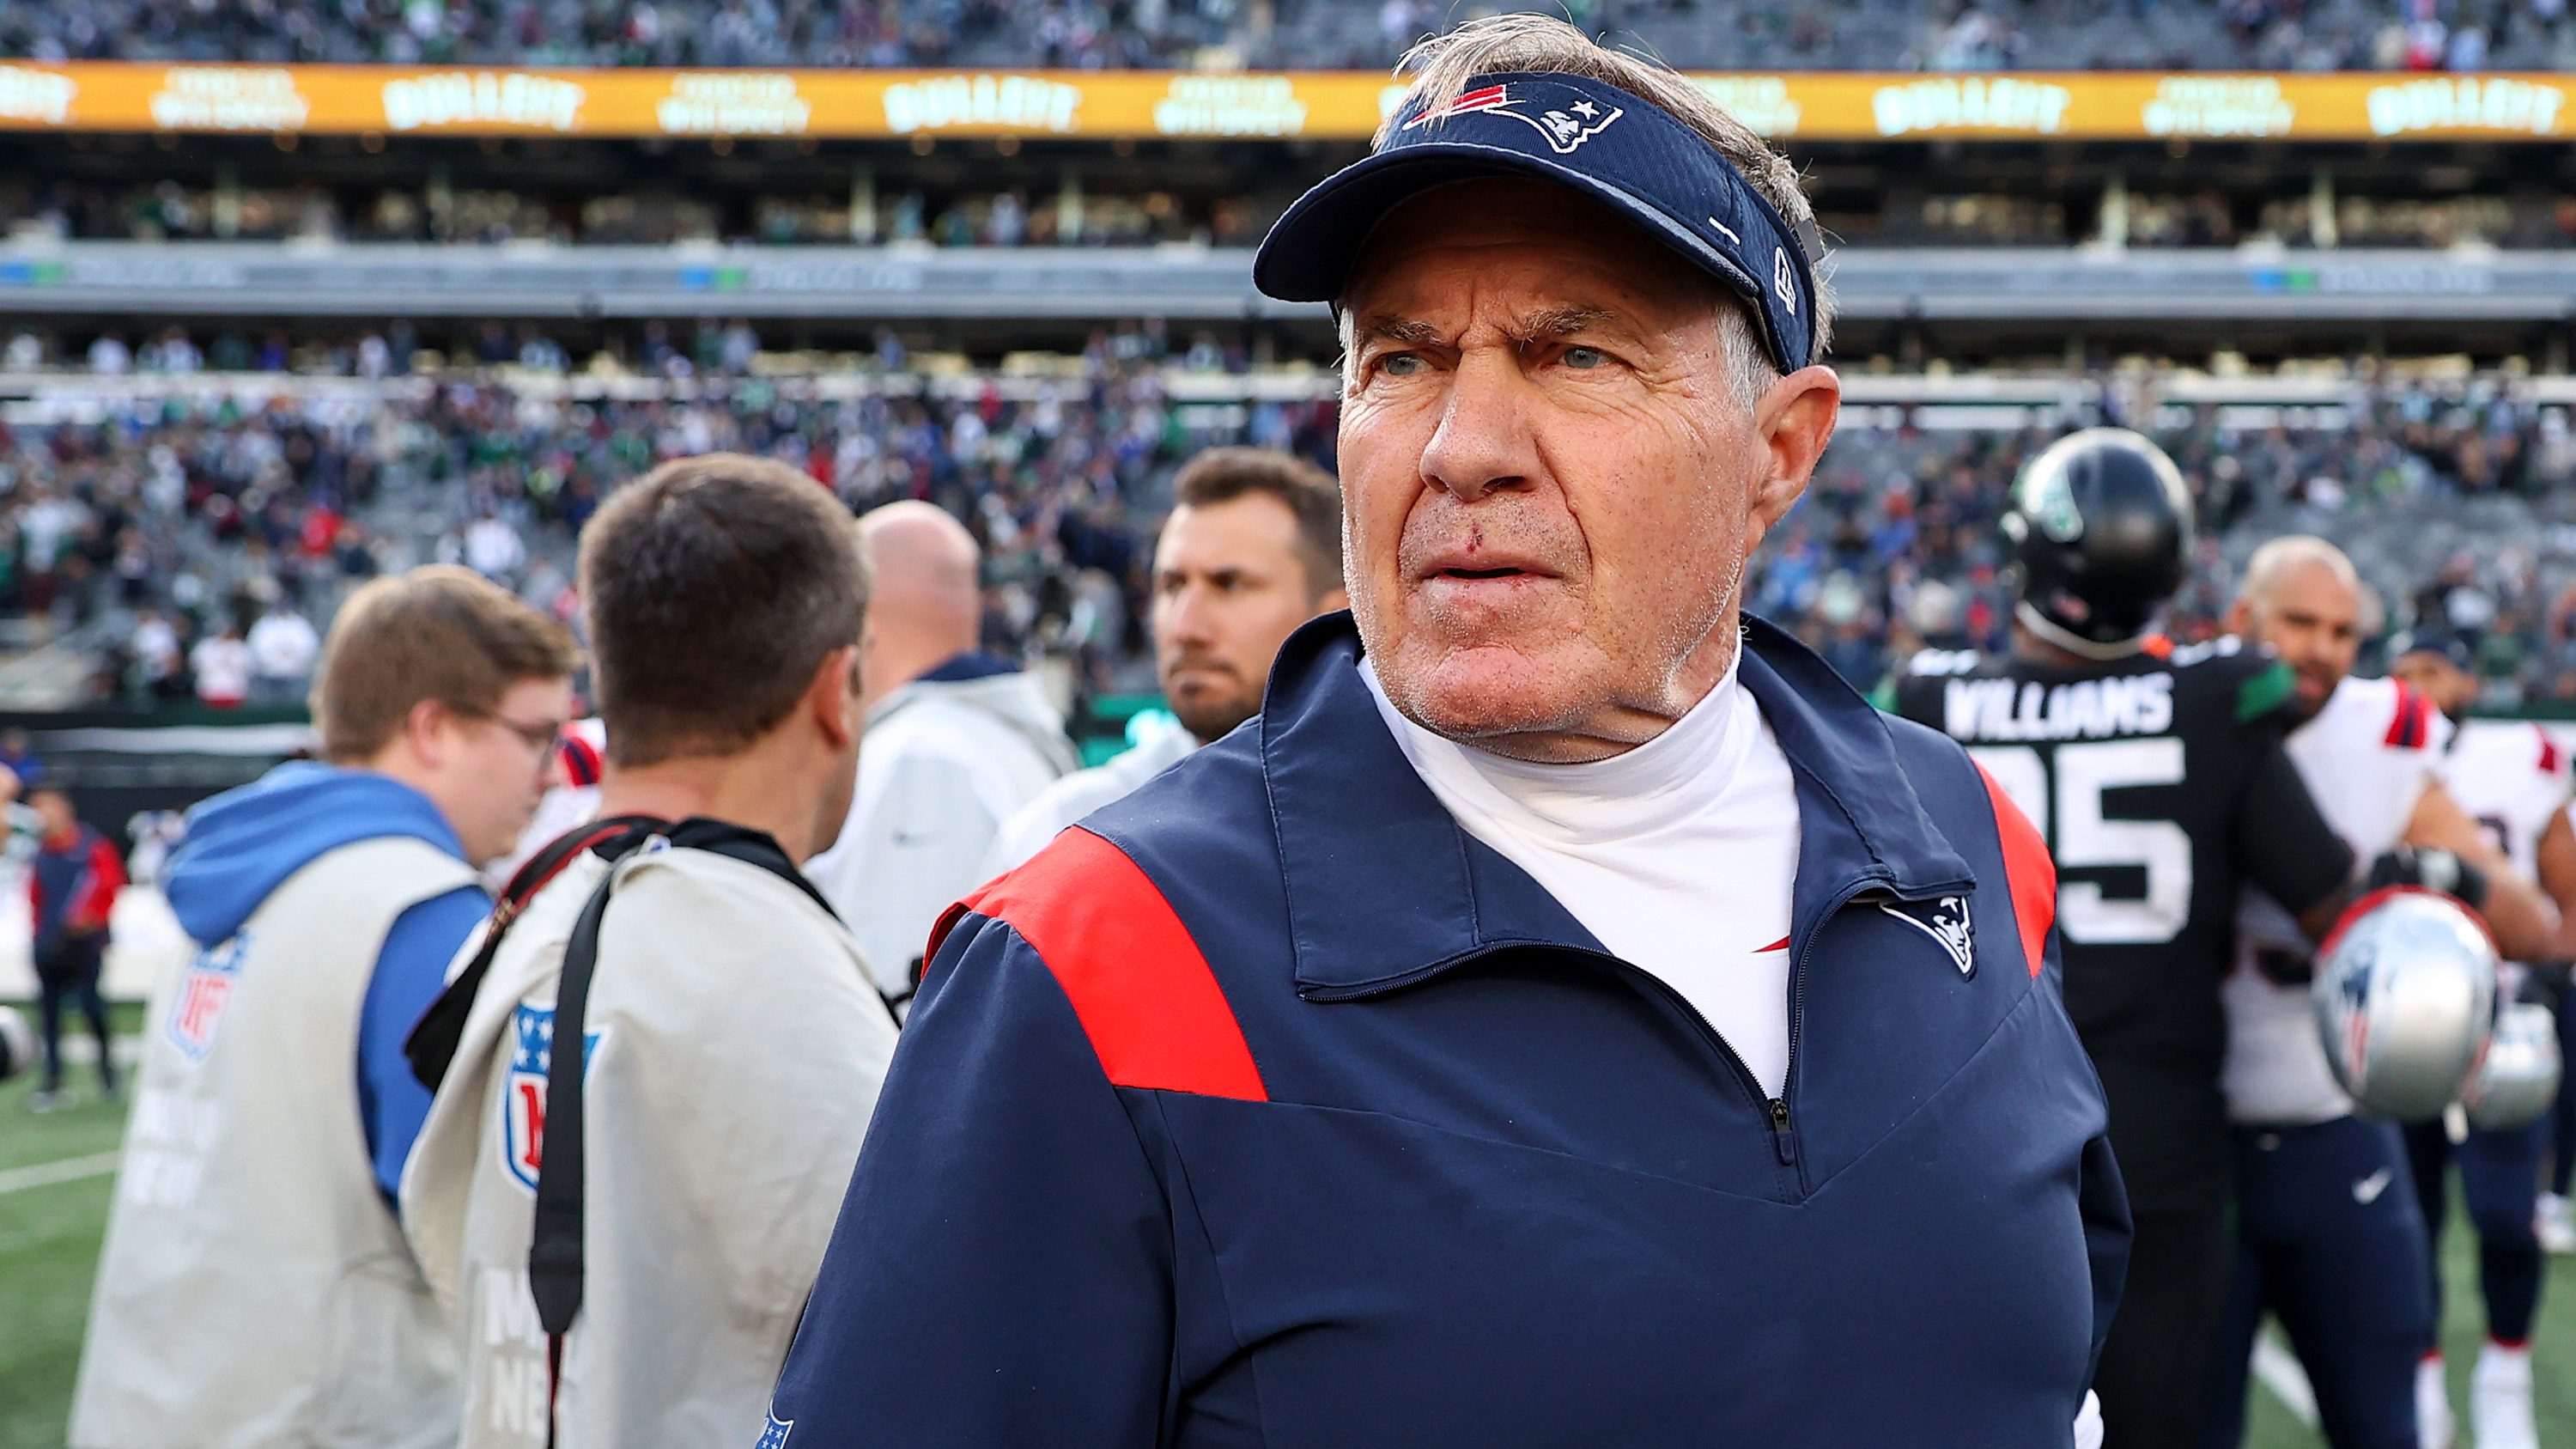 Jets Coach Takes Shot at Patriots' Bill Belichick on 'Hard Knocks'